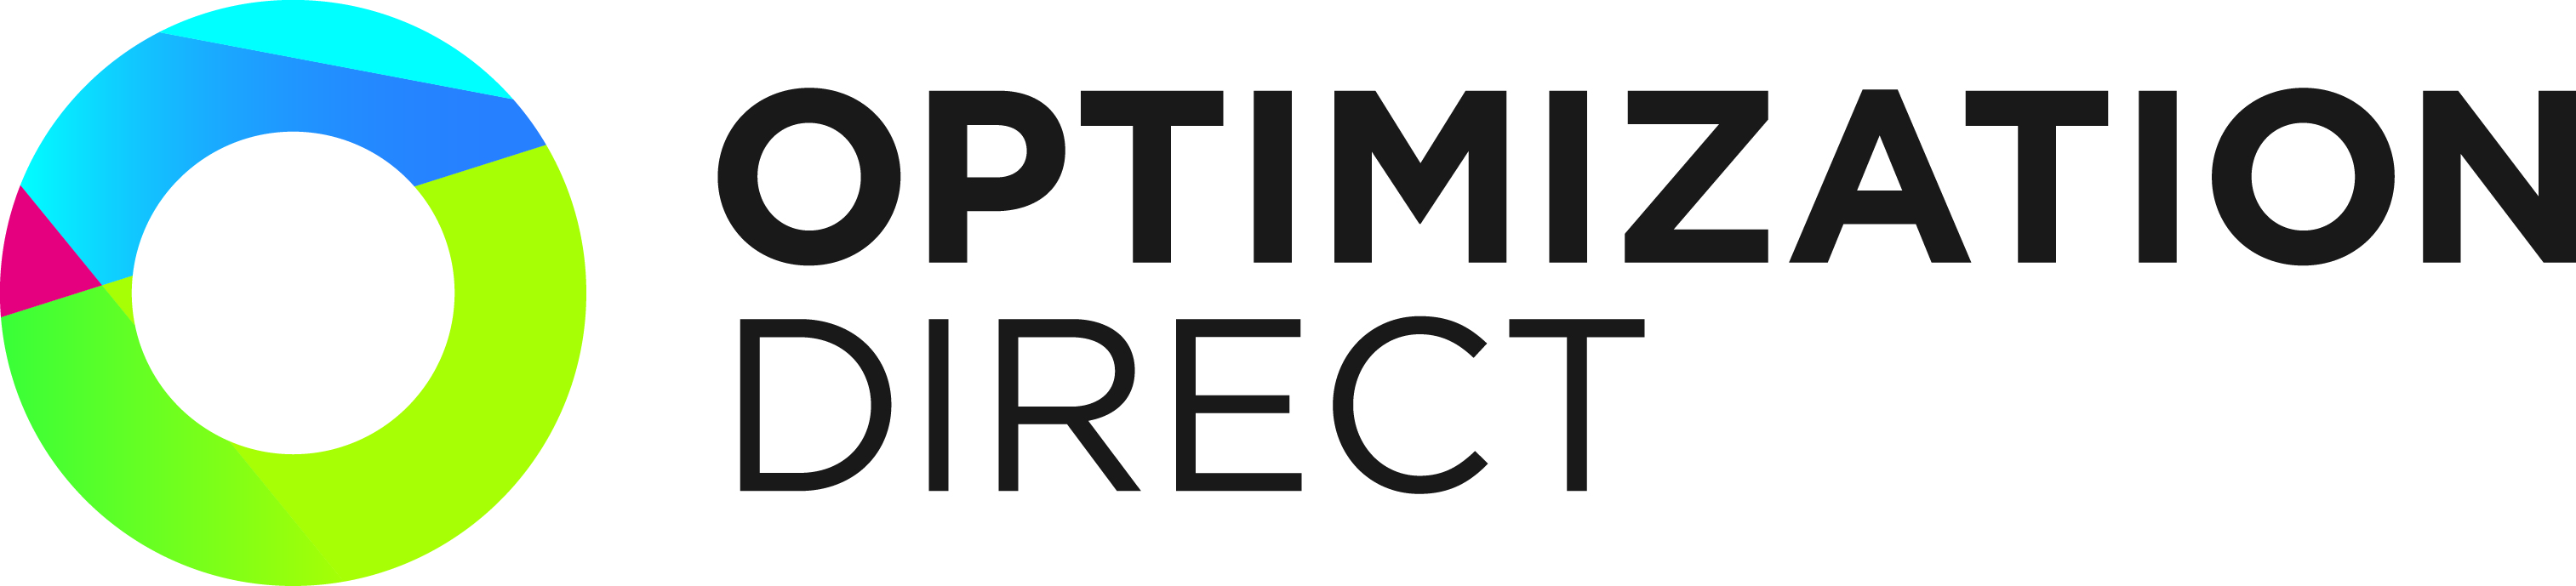 Optimization Direct logo